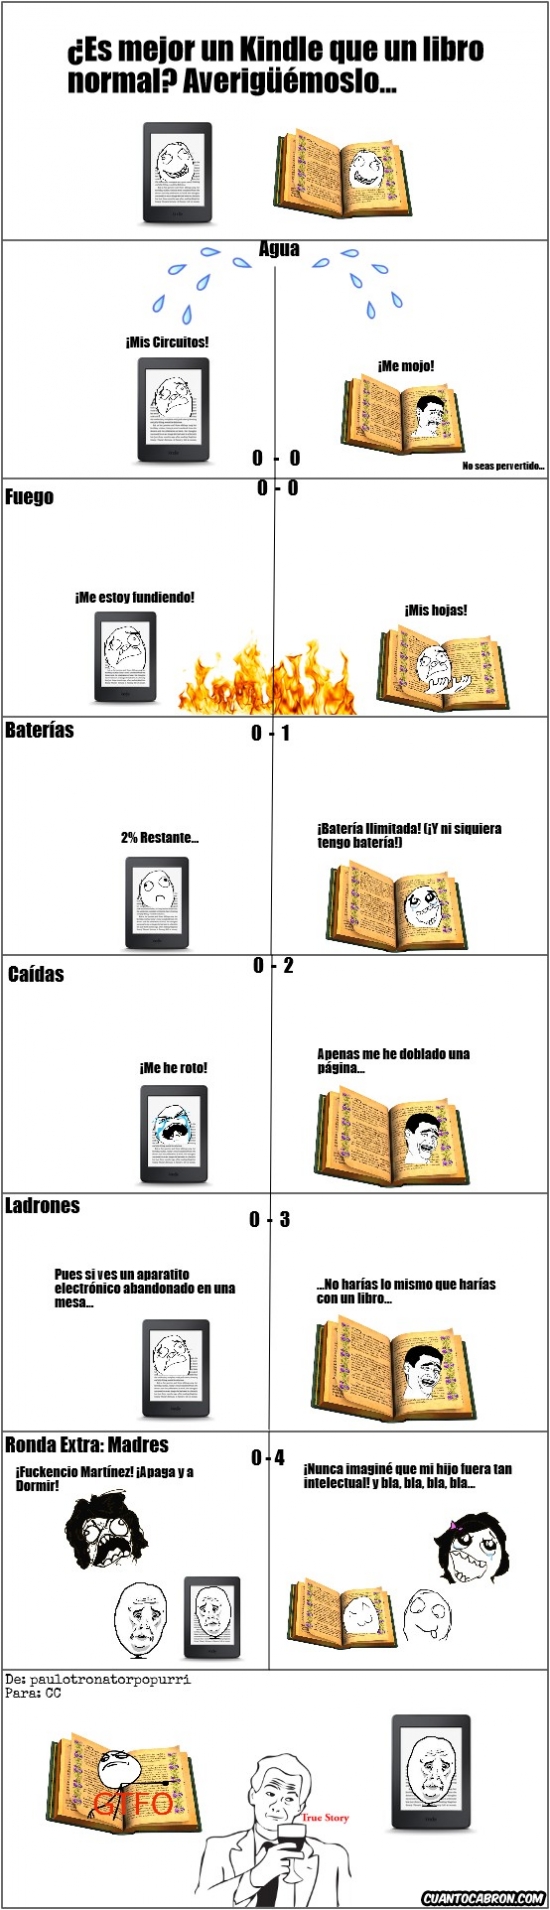 True_story - Kindle vs Libros